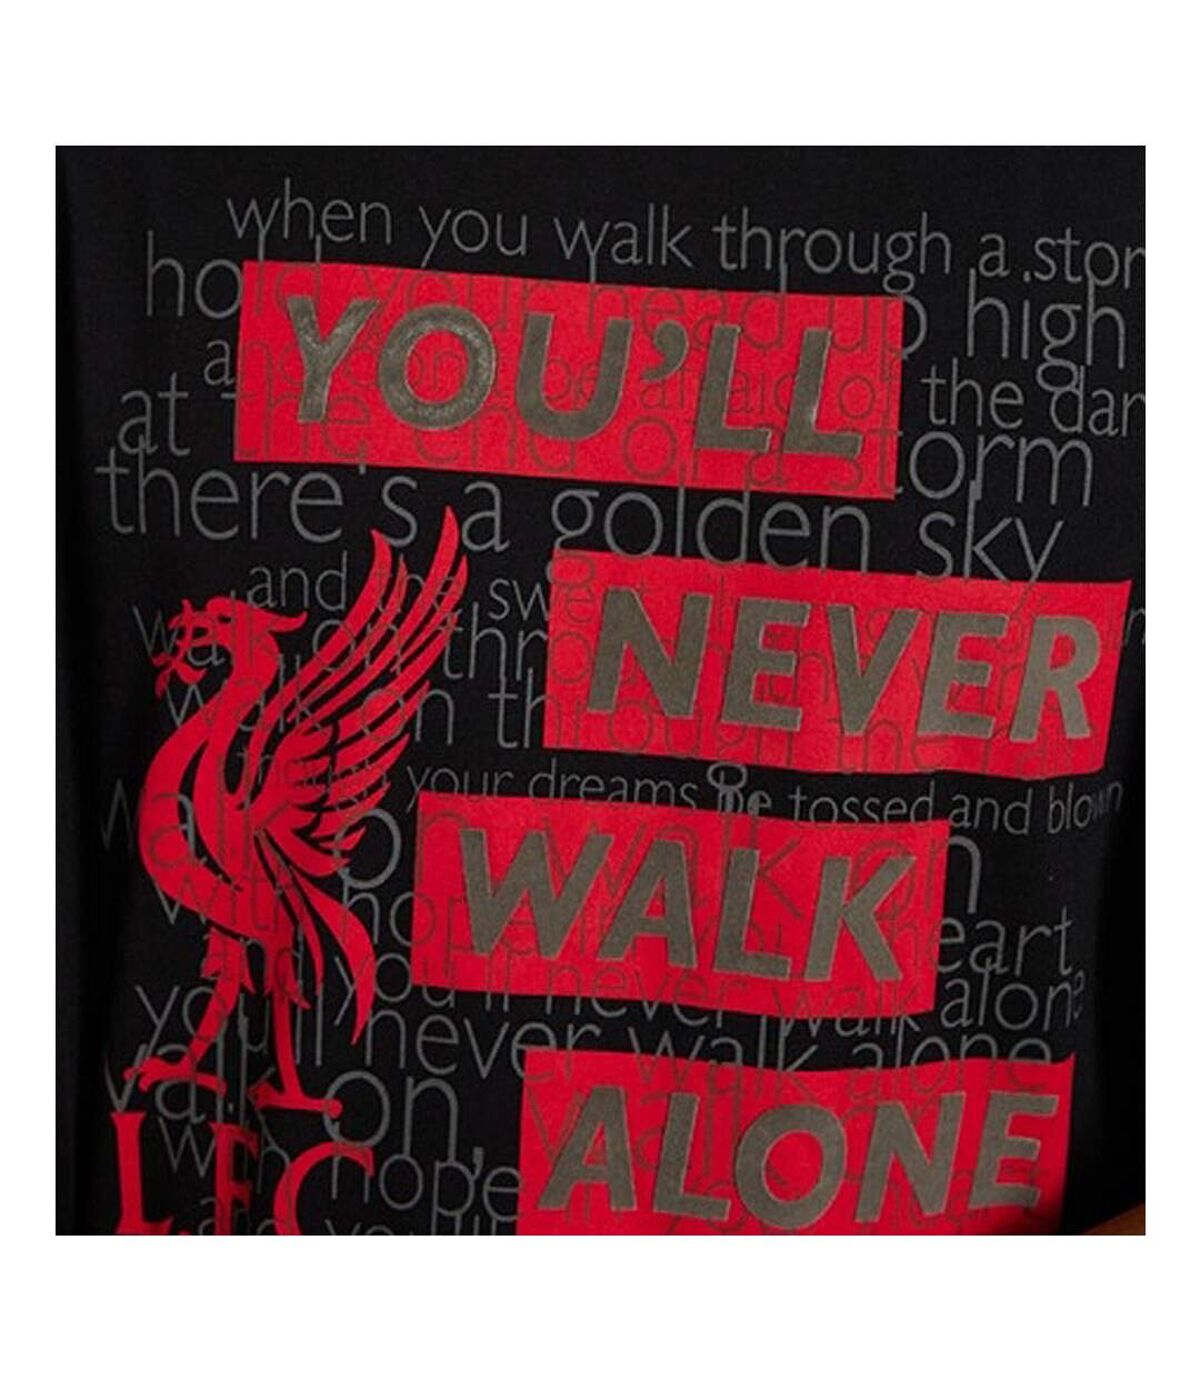 Liverpool FC Mens YNWA Cotton T-Shirt (Black)